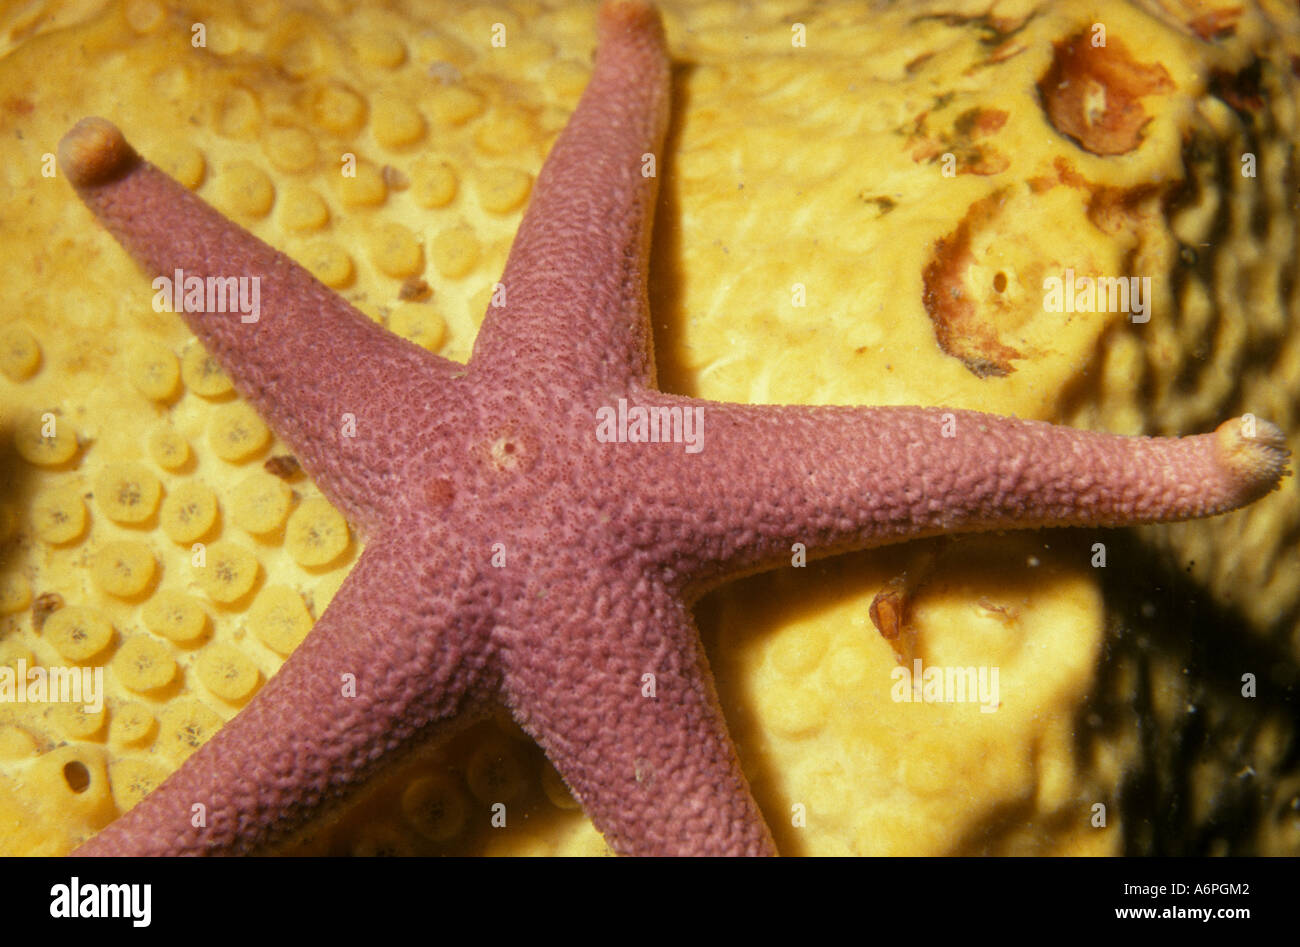 Bloody Henry starfish on yellow sponge off the south Devon Coast of Engalnd Stock Photo